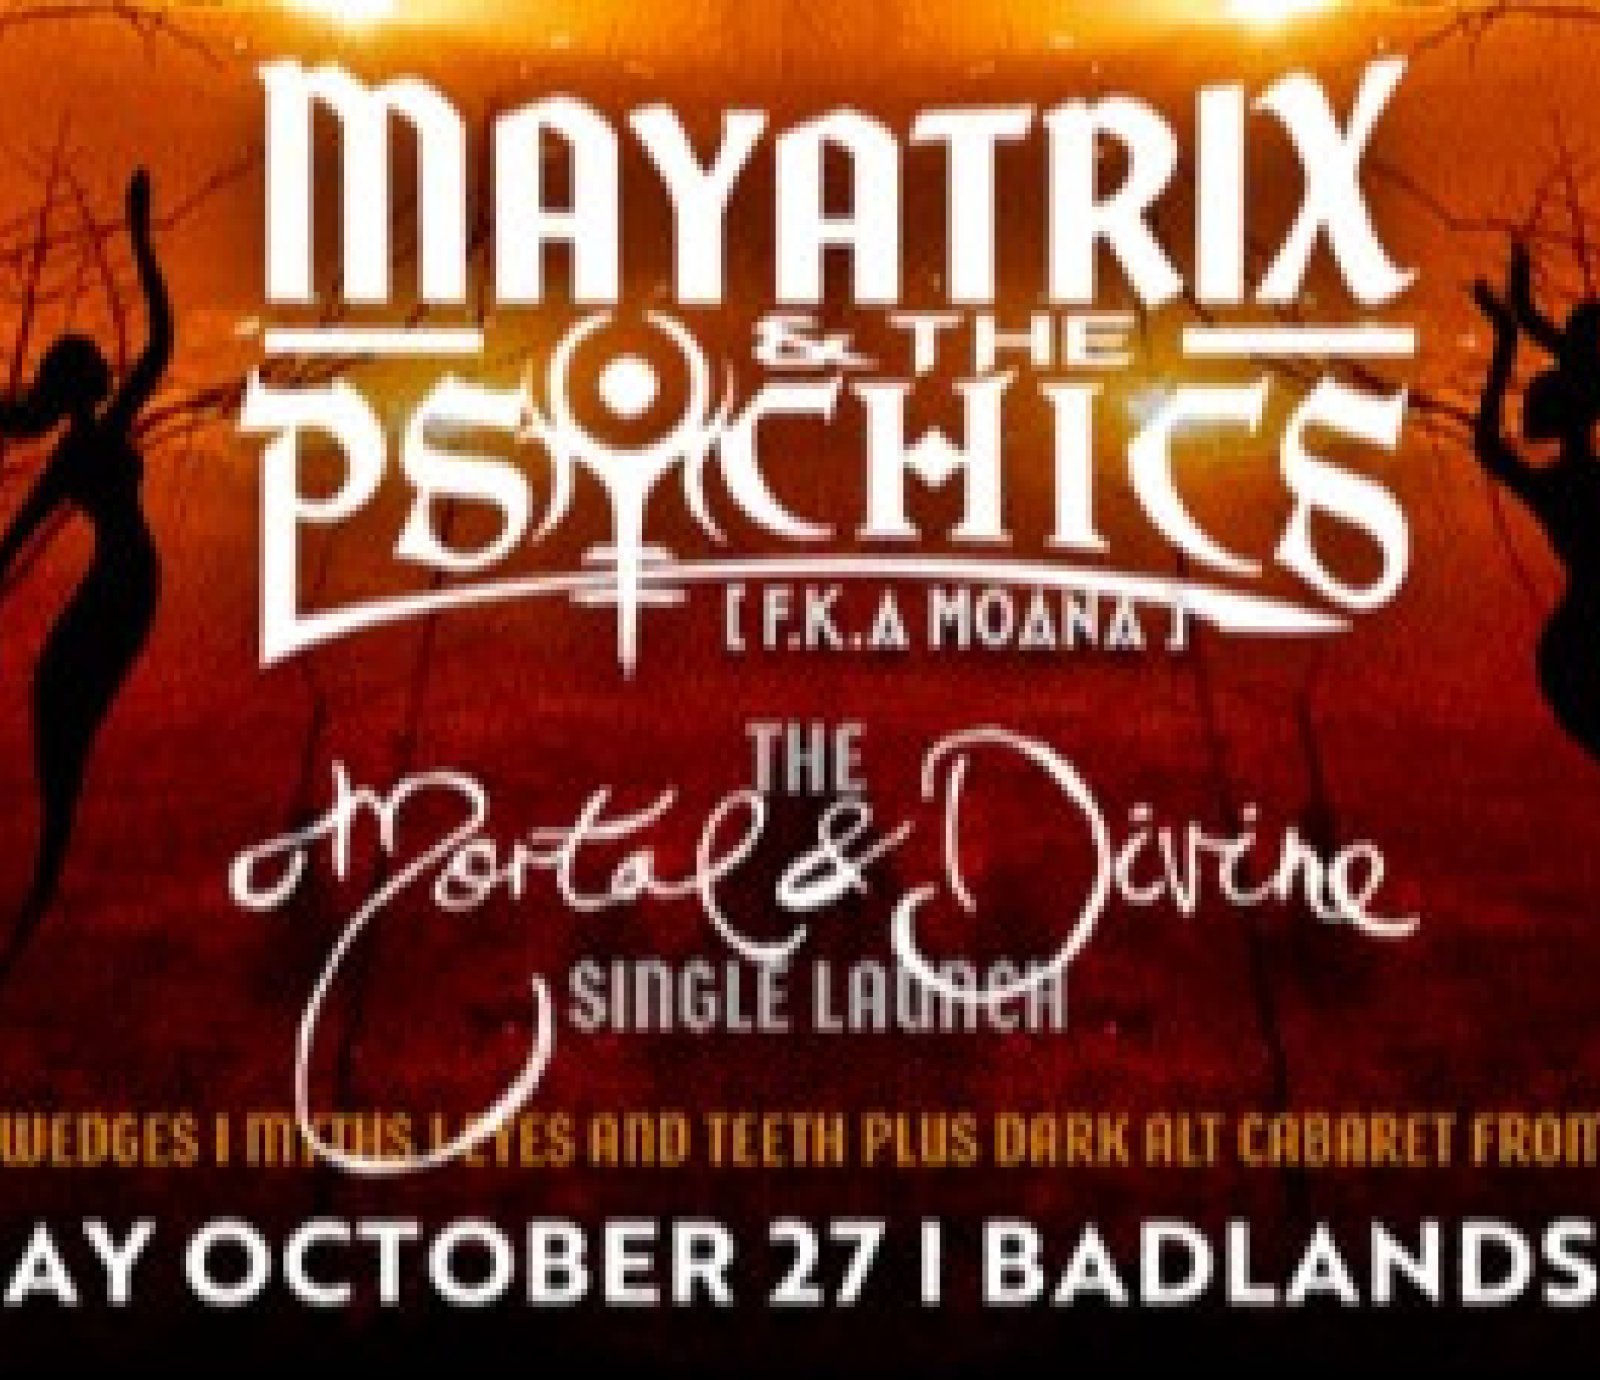 Mayatrix & The Psychics